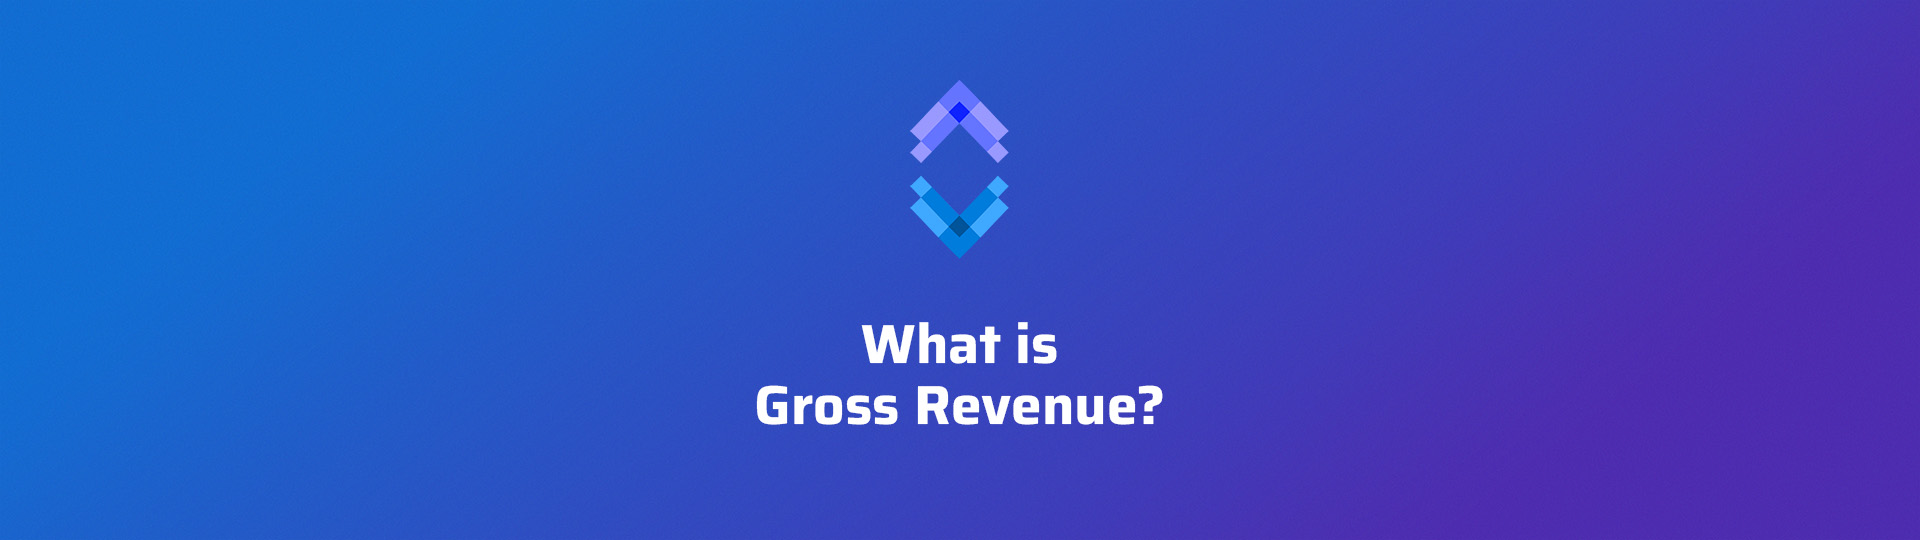 What is Gross Revenue